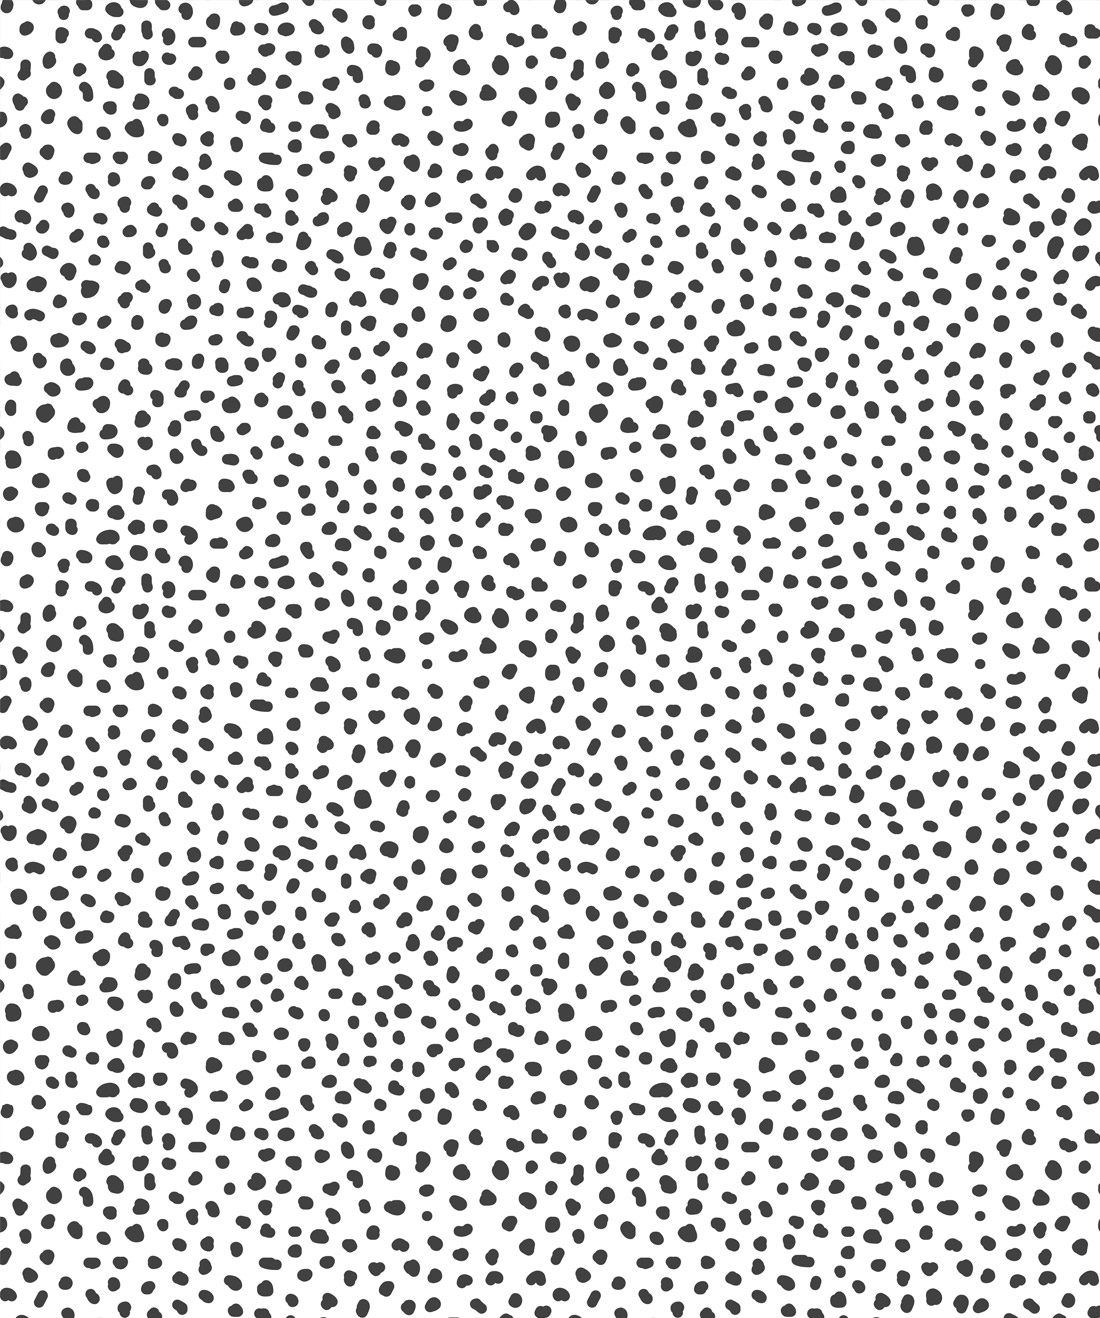 Huddys dots â luxurious spotted wallpaper â milton king aus